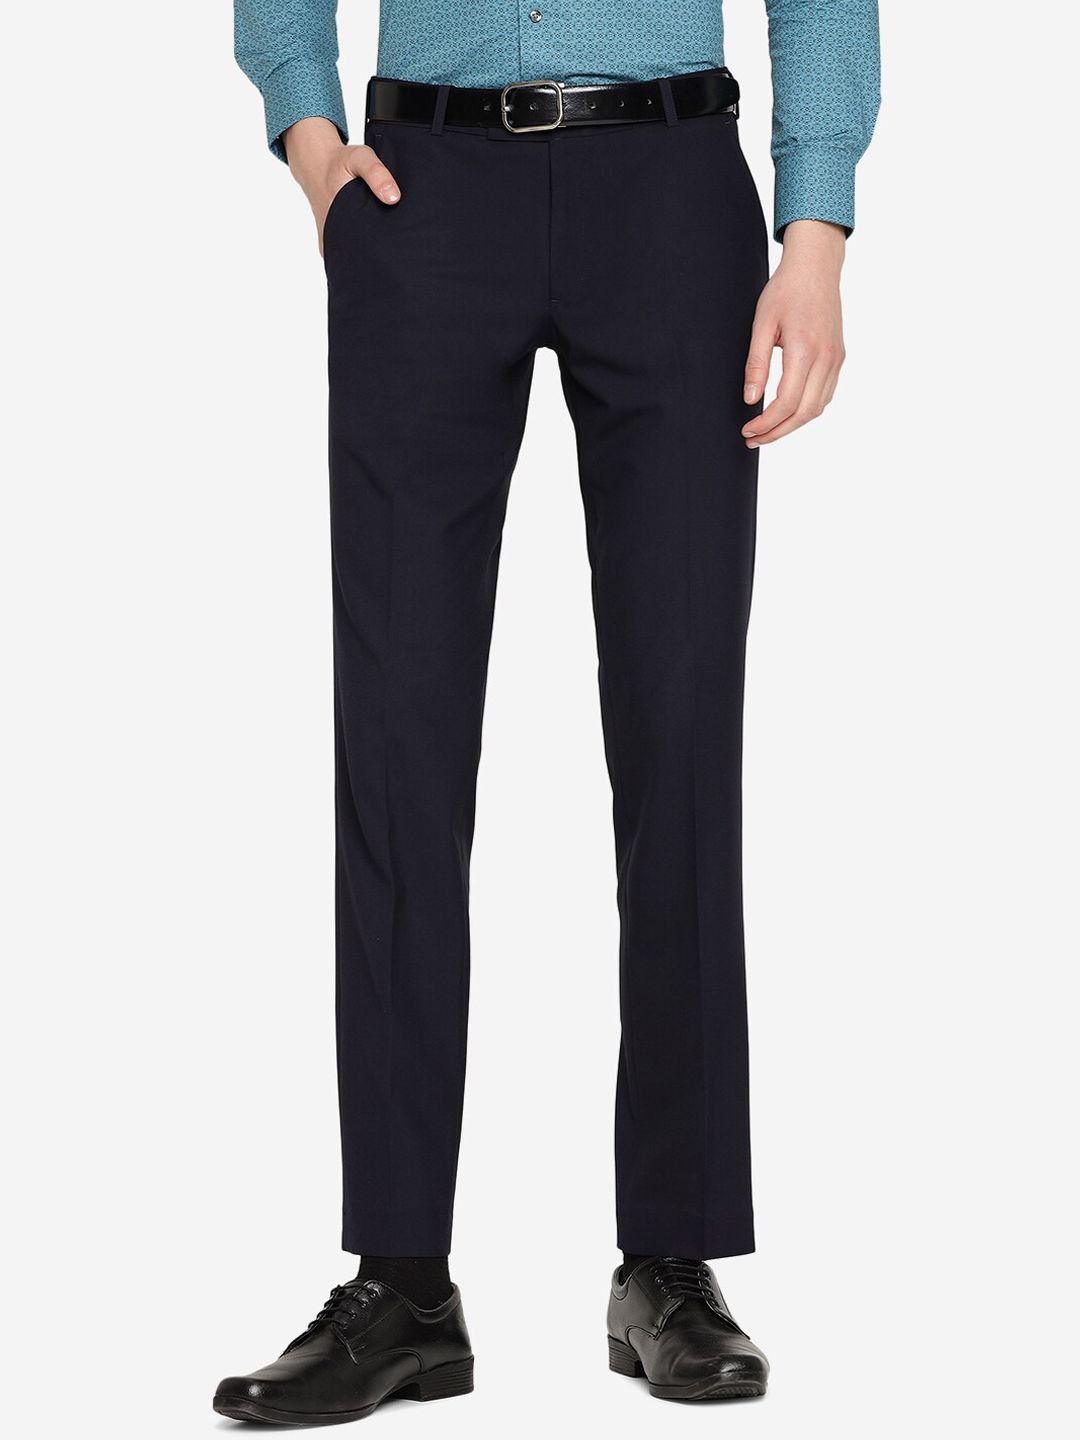 Jade Blue Slim Fit Men Blue Trousers - Buy Jade Blue Slim Fit Men Blue  Trousers Online at Best Prices in India | Flipkart.com